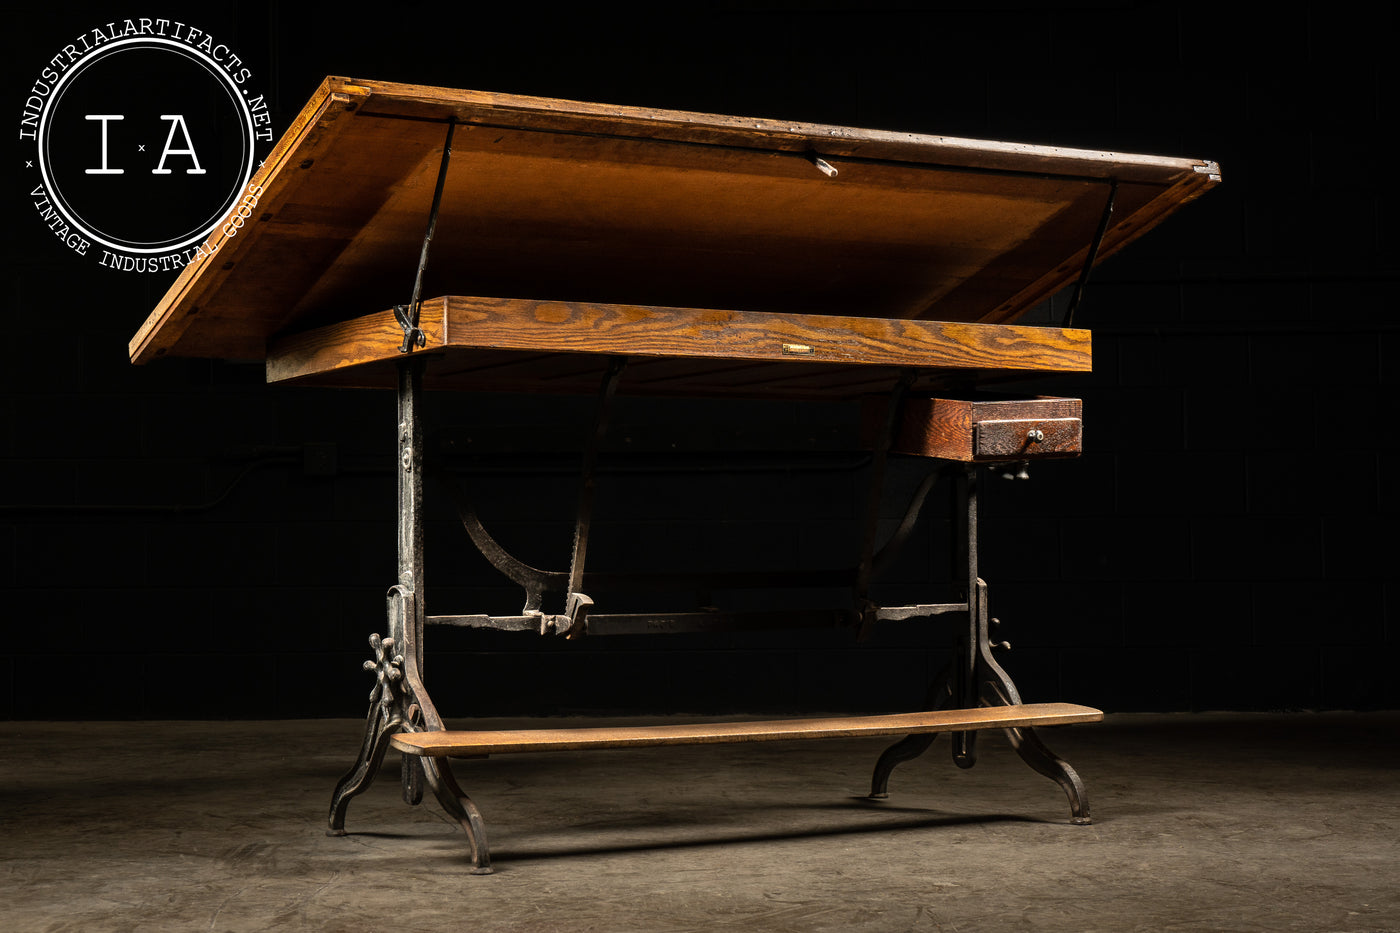 Hamilton Mfg. Co. Industrial Antique Drafting Table